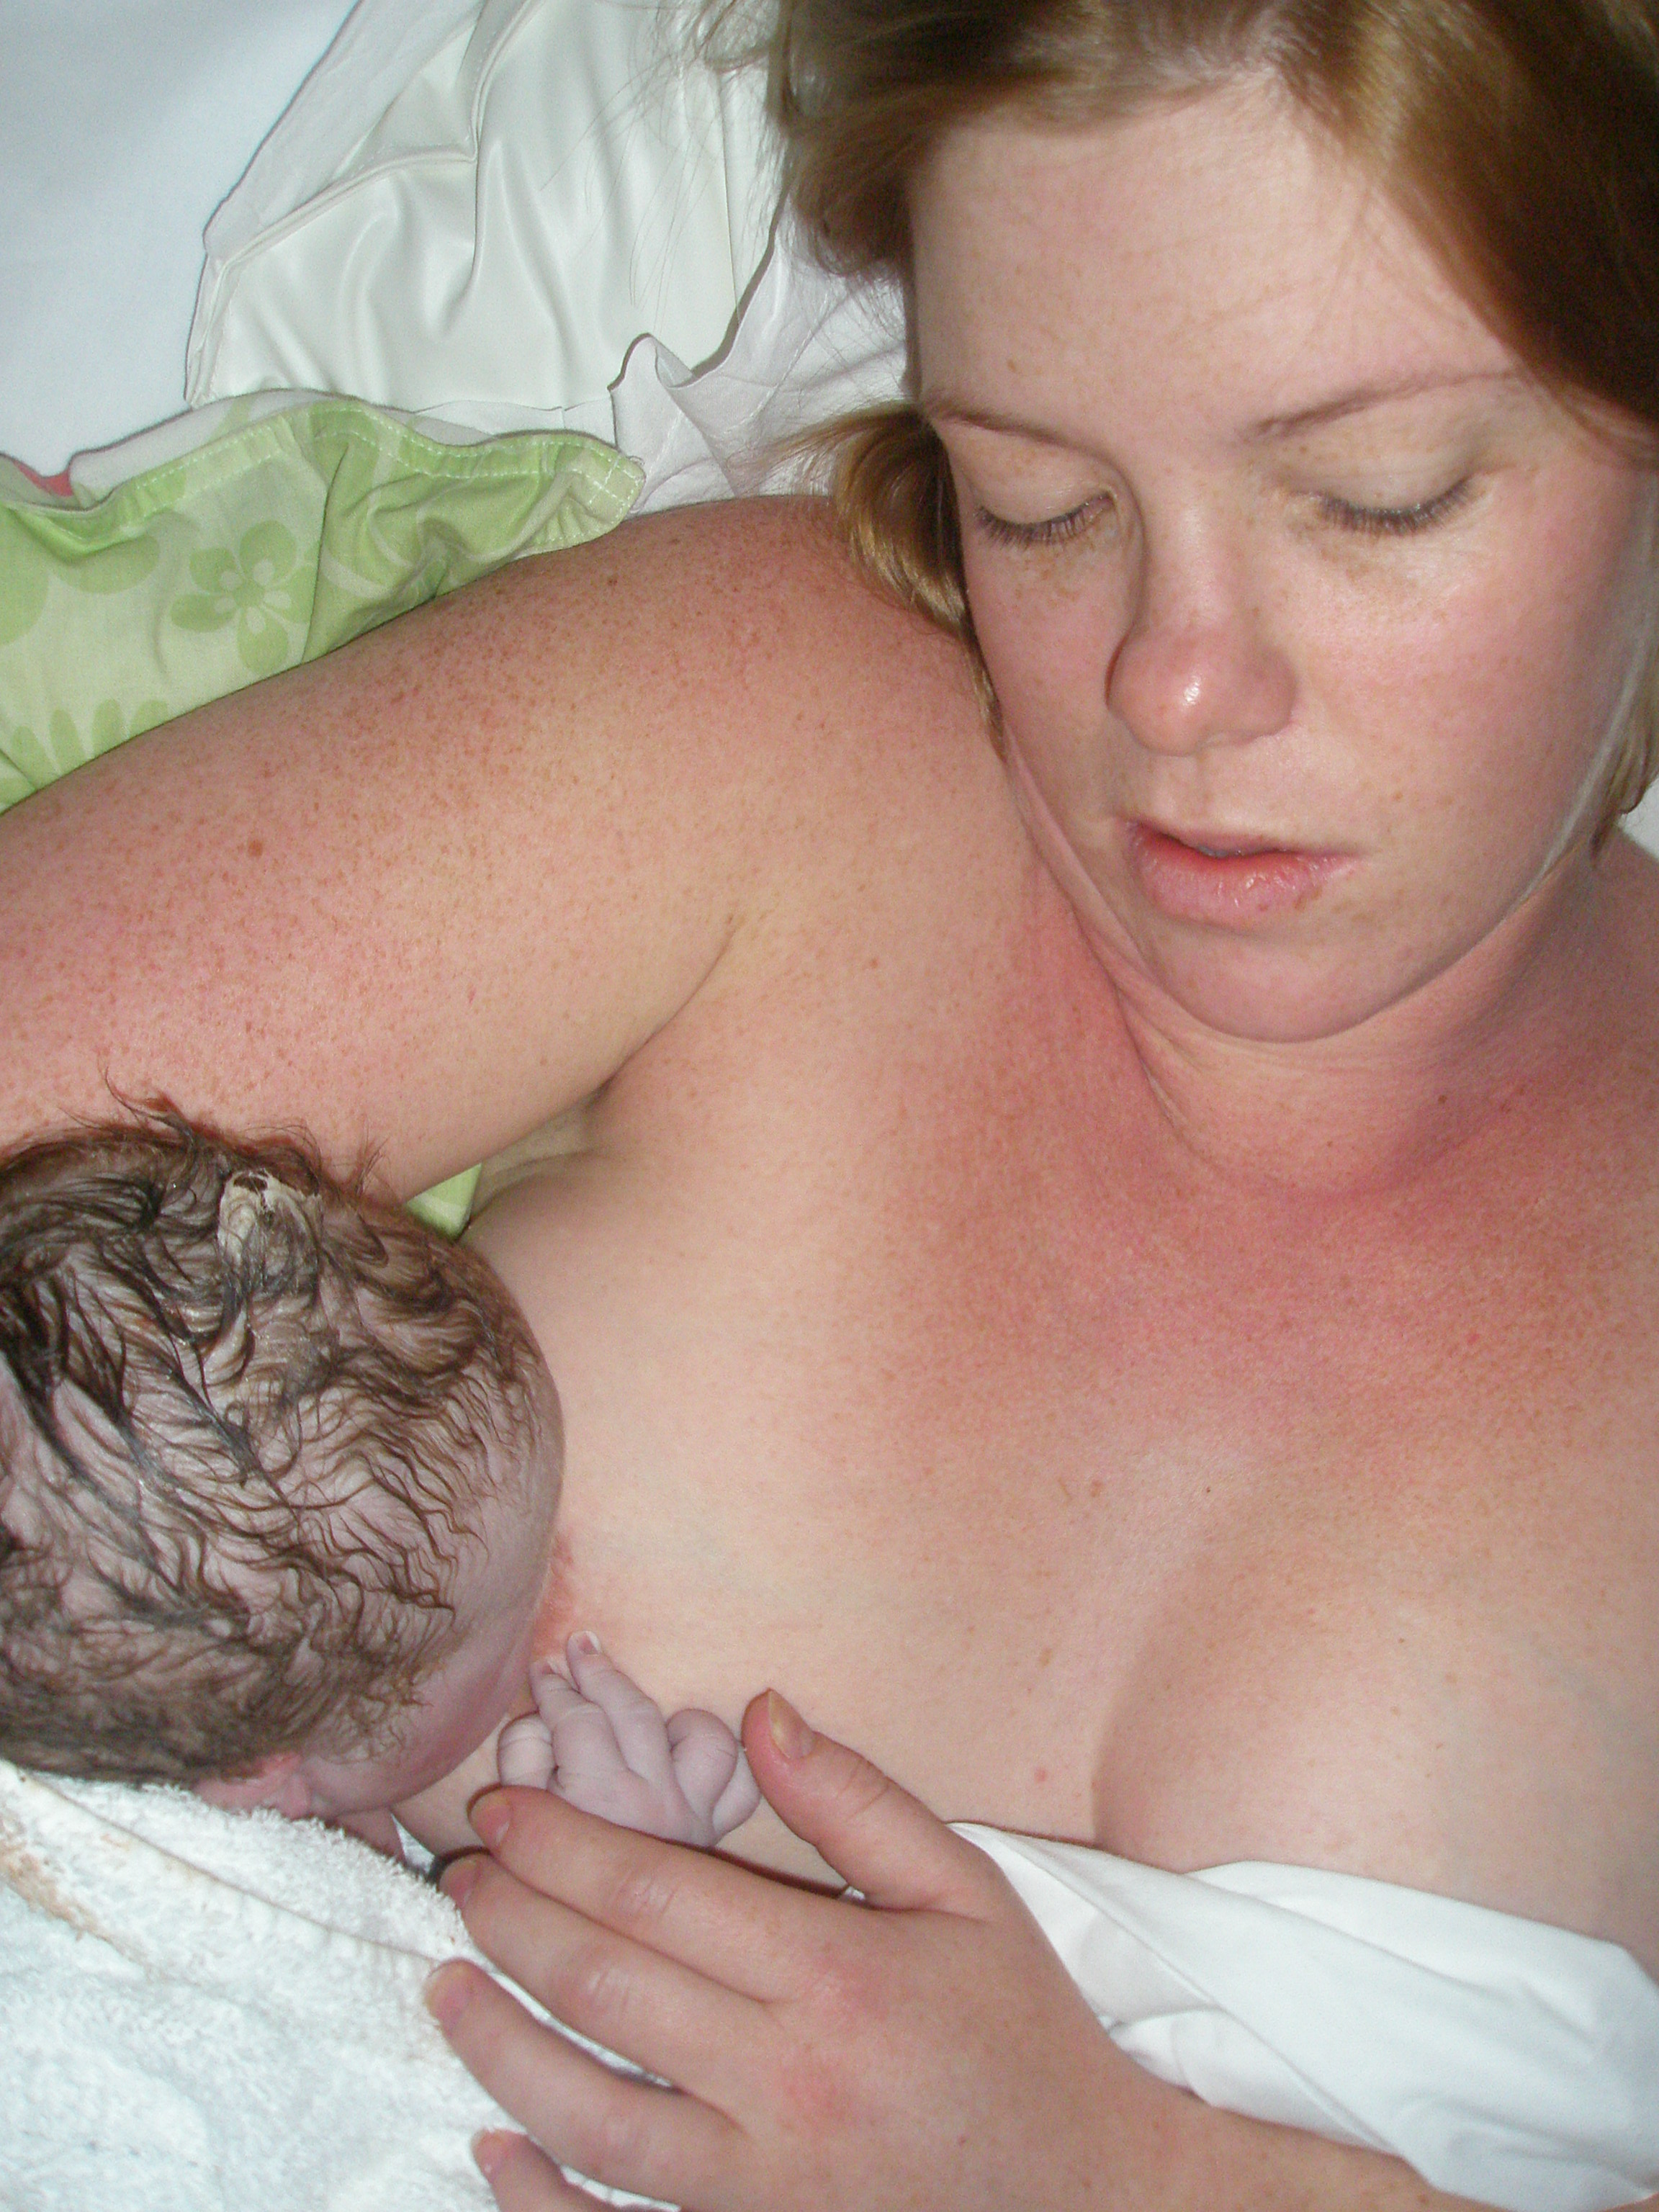 Women Breastfeeding Husband Pictures